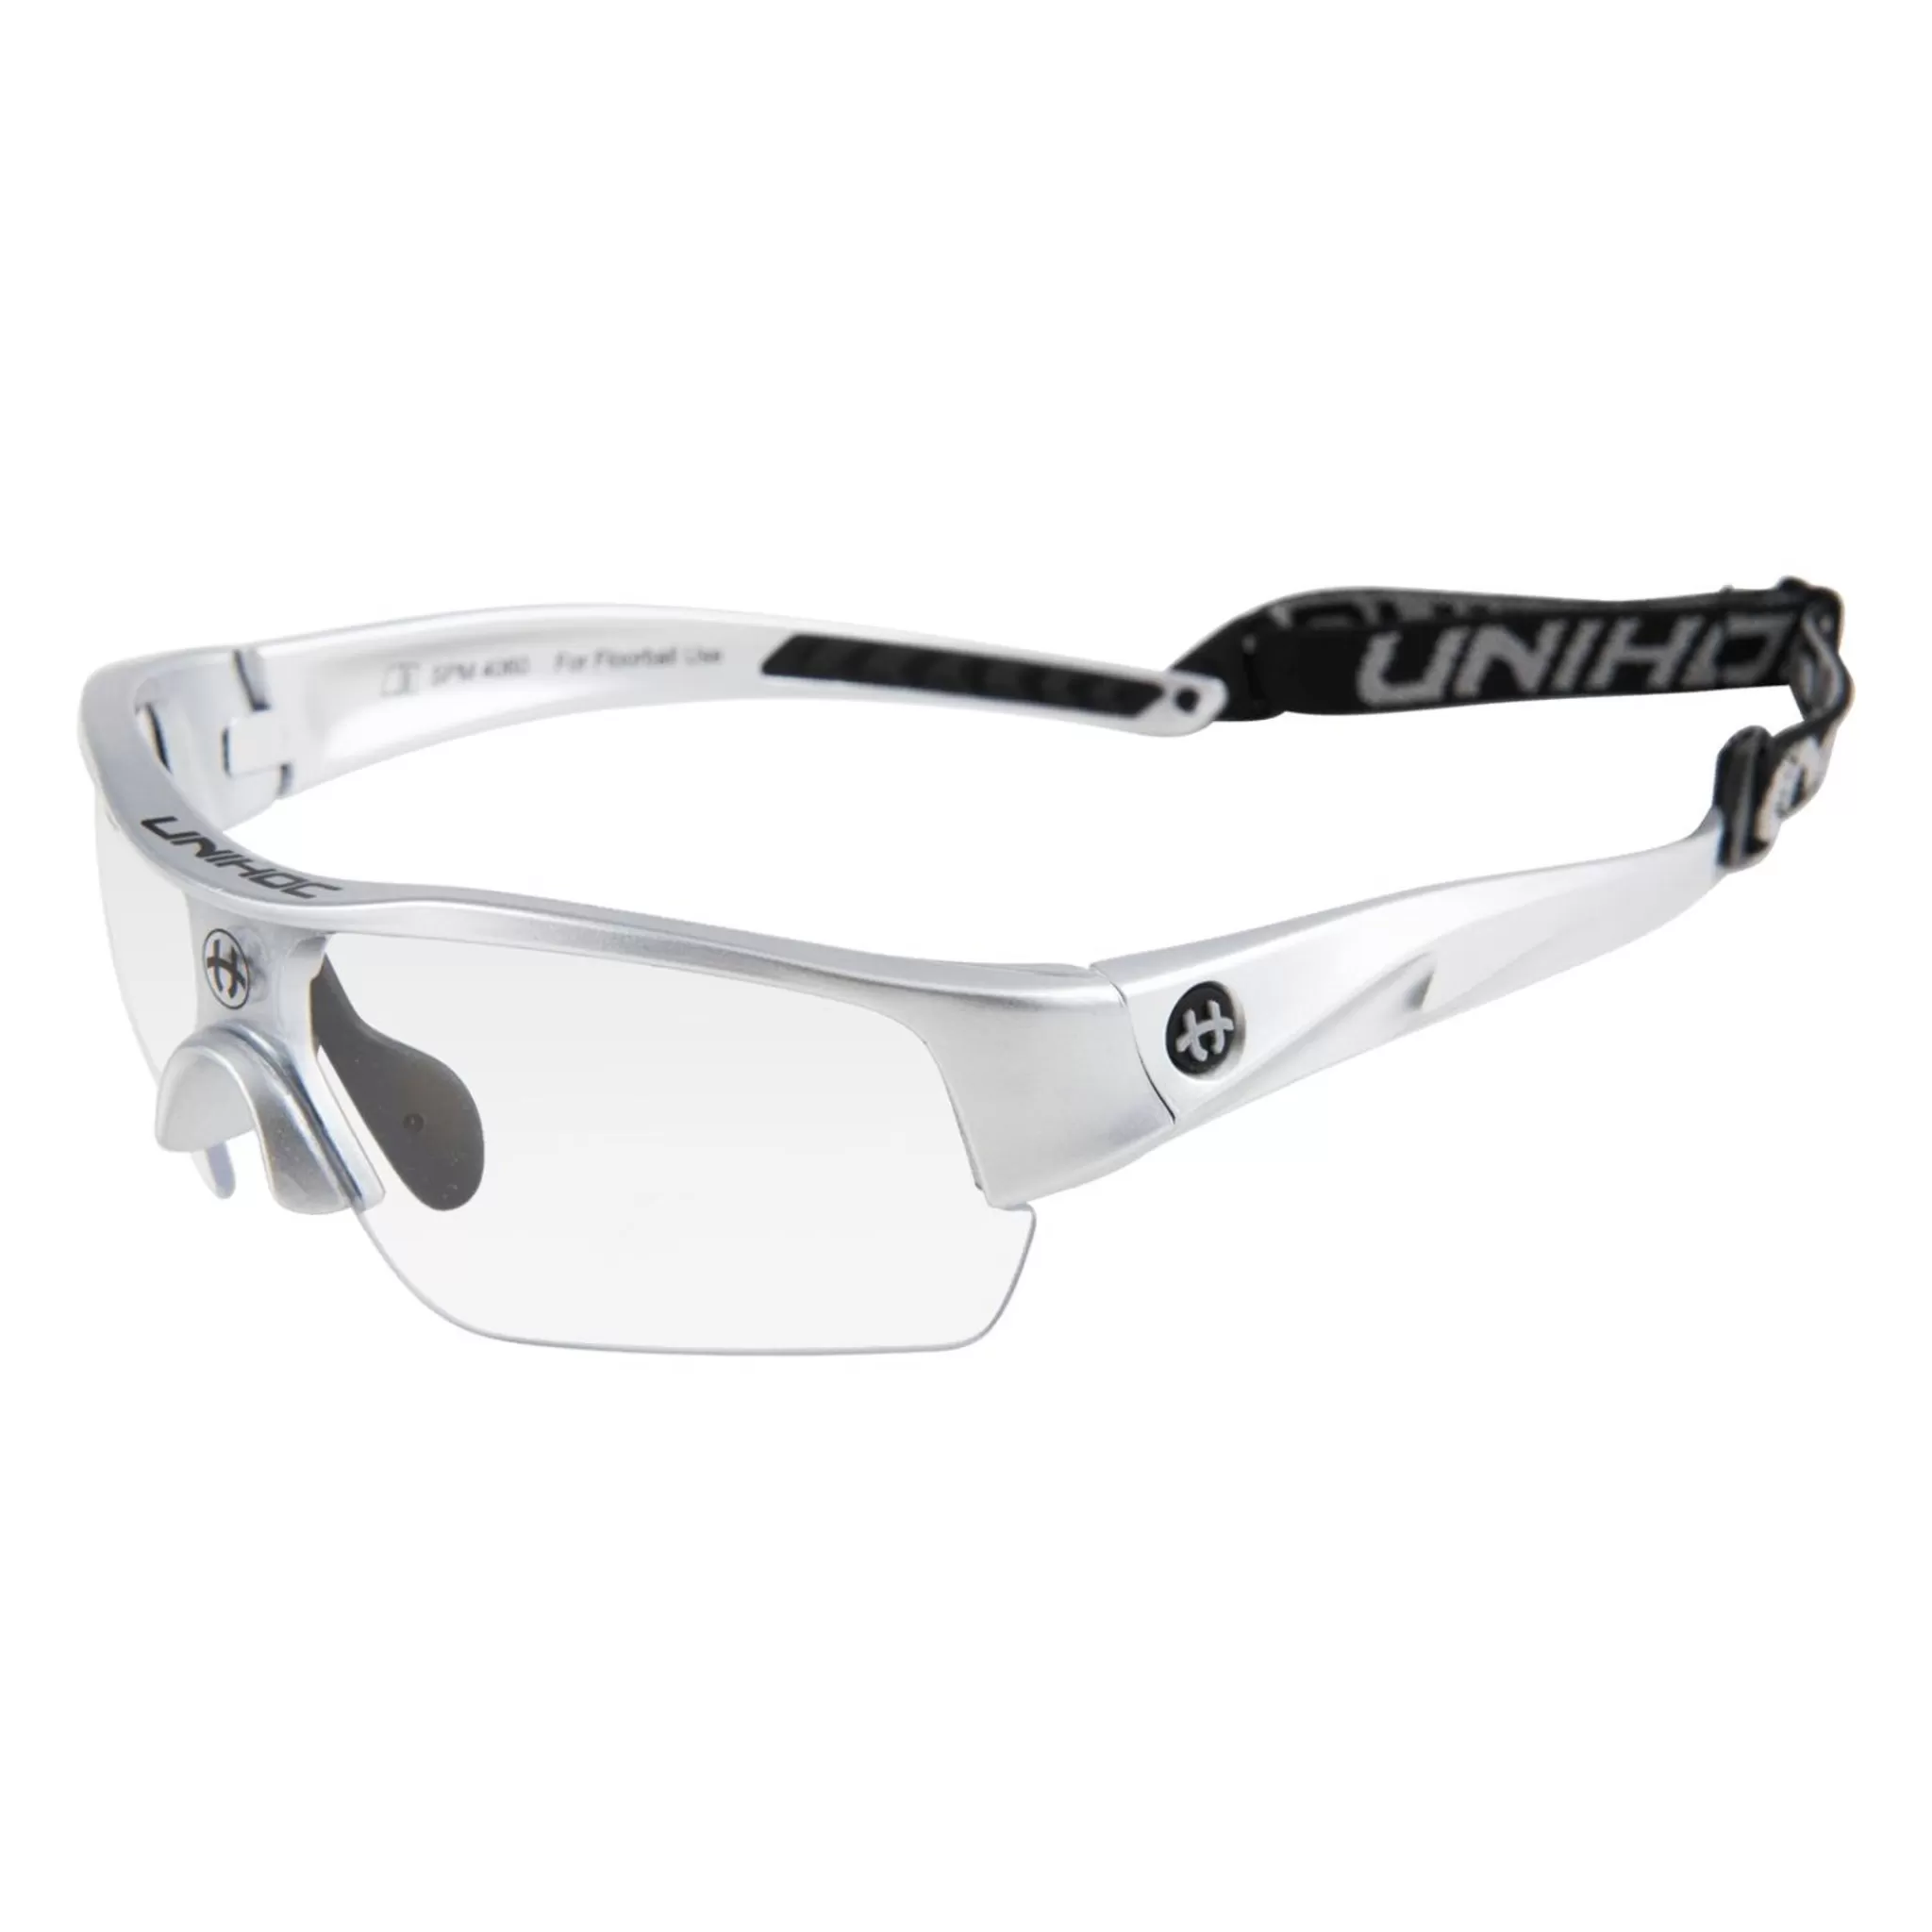 New unihoc Eyewear Victory, Innebandybriller, Unisex